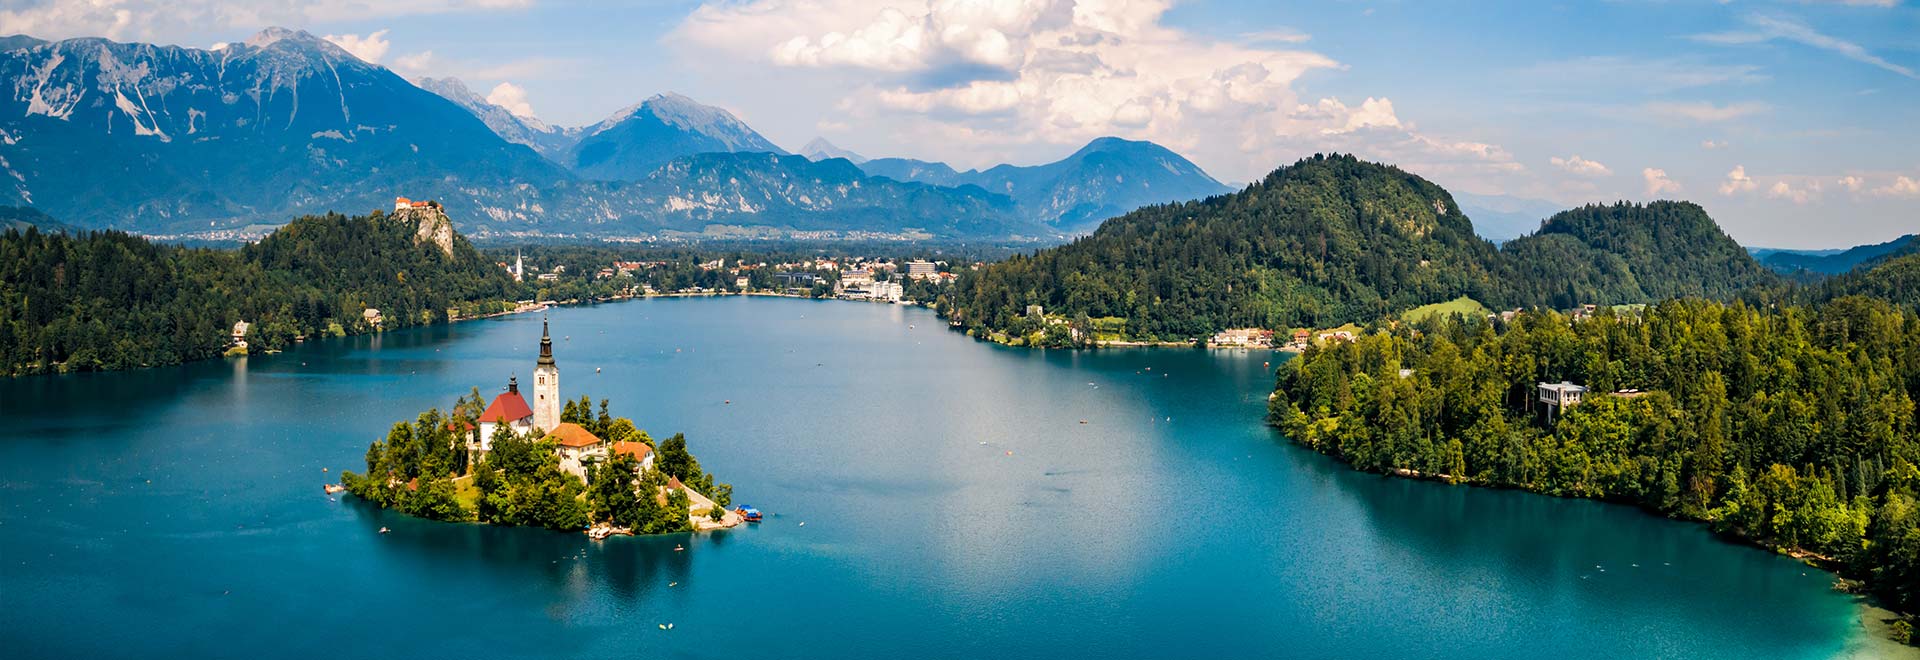 Europe Slovenia Lake Bled